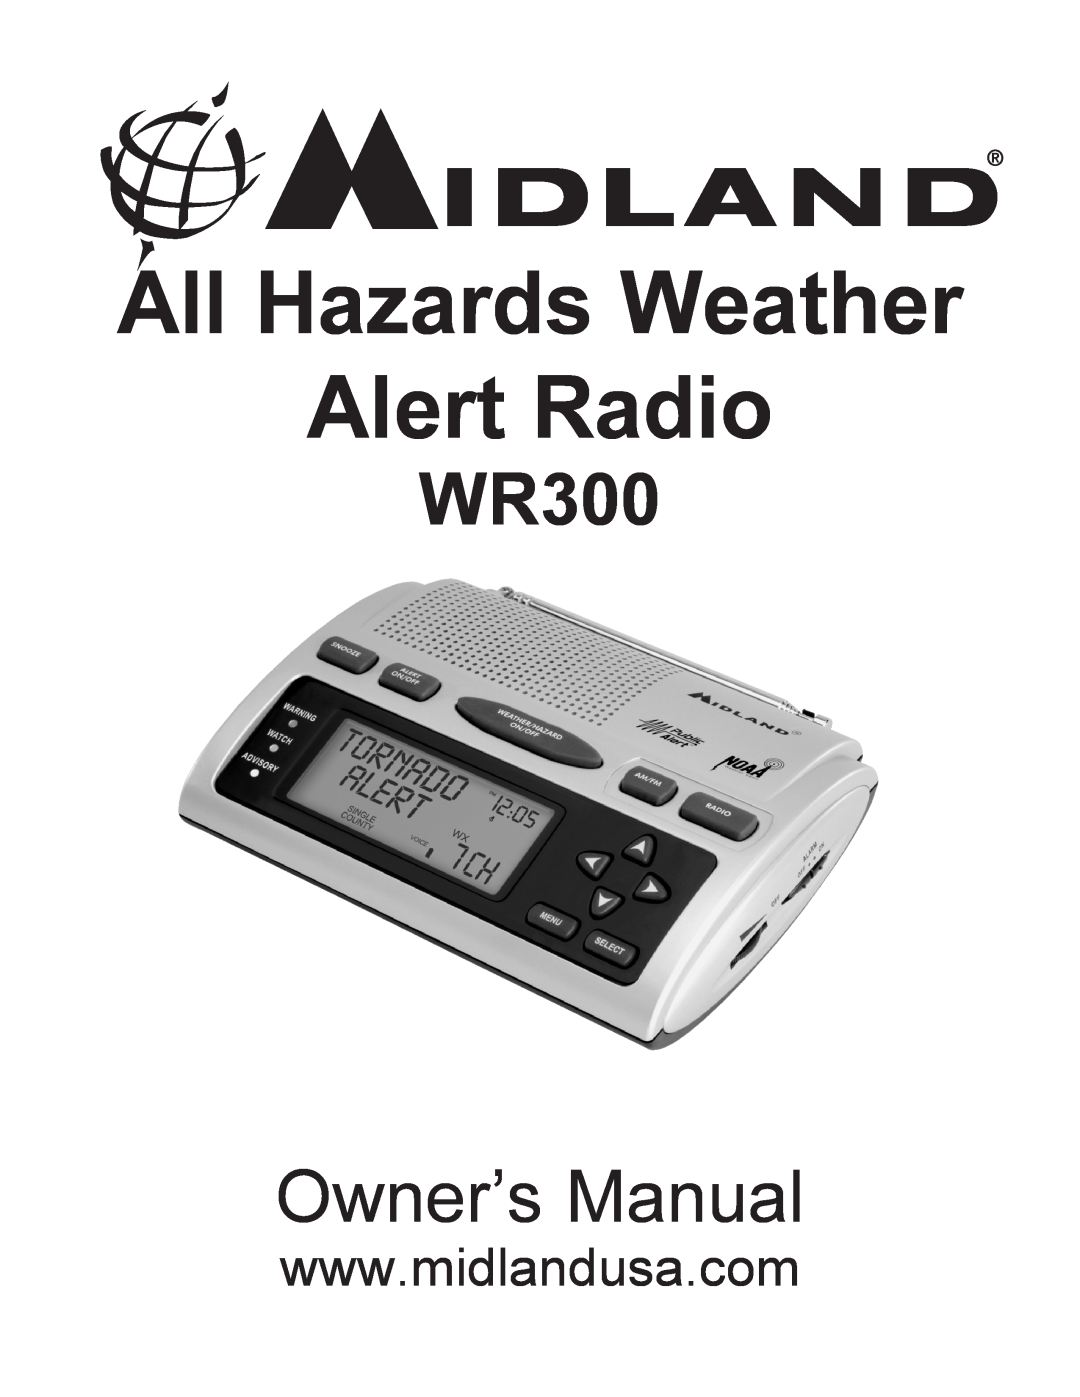 Midland Radio WR300 owner manual All Hazards Weather Alert Radio 